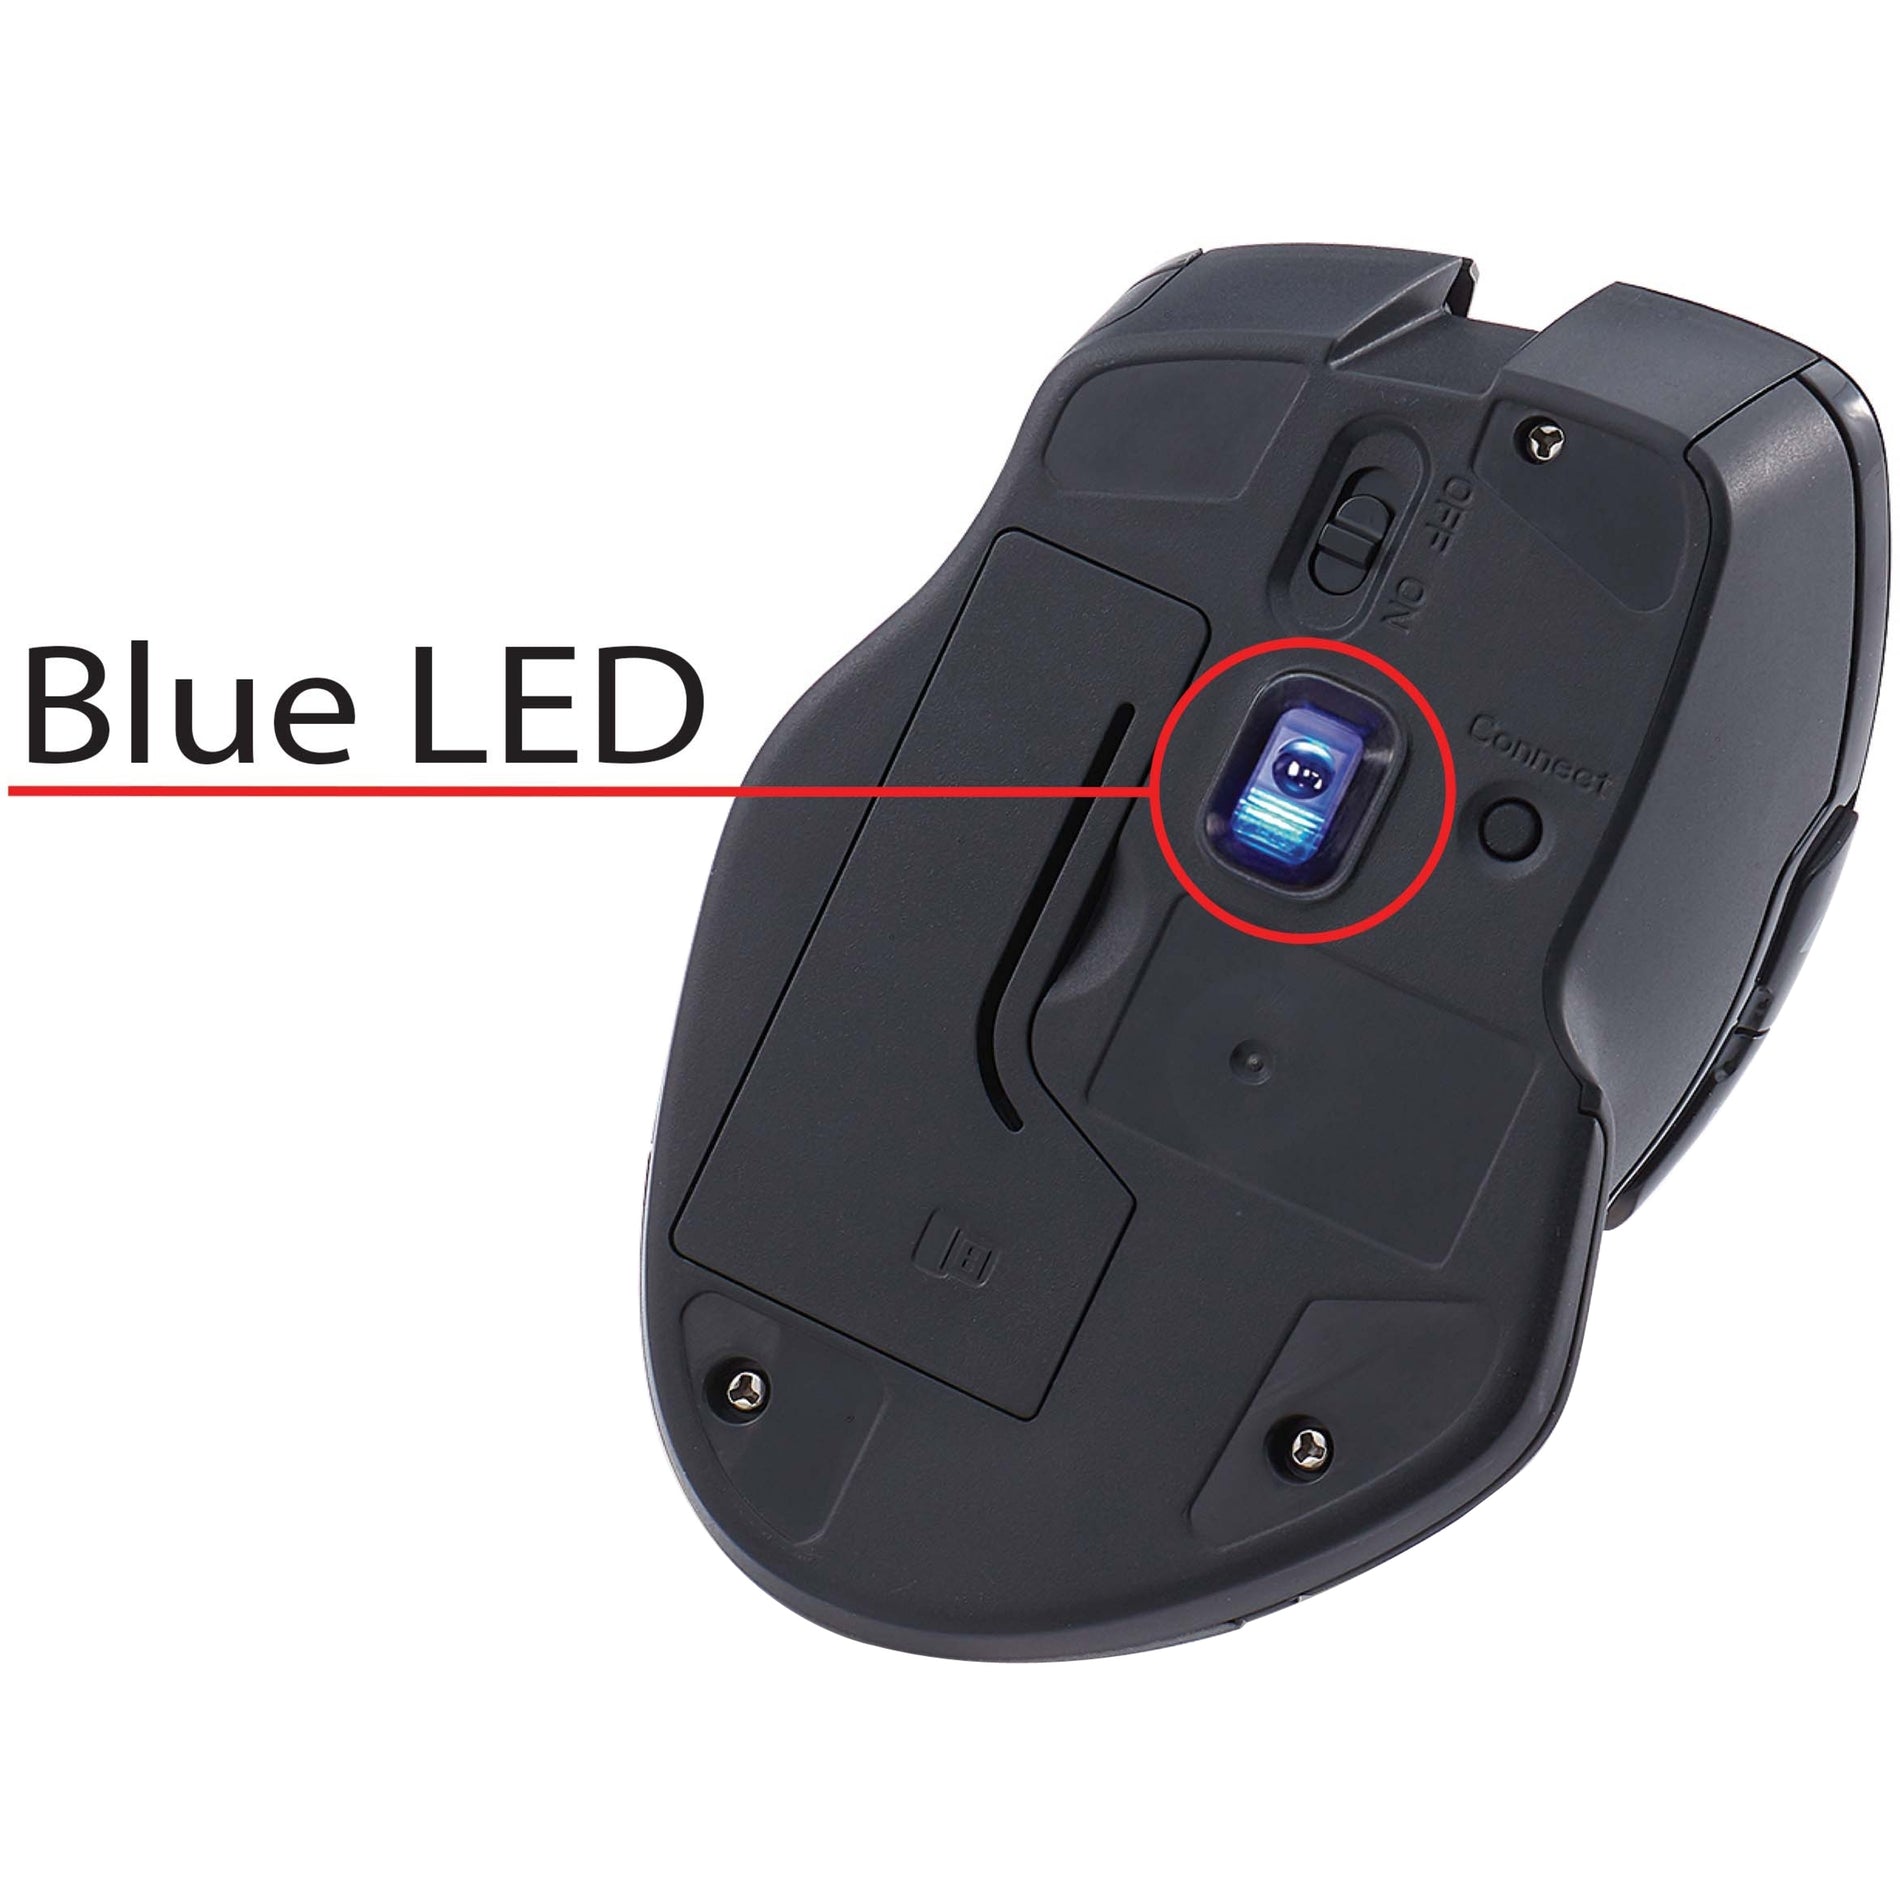 Verbatim 70247 Mouse, Wireless Blue LED, Teal